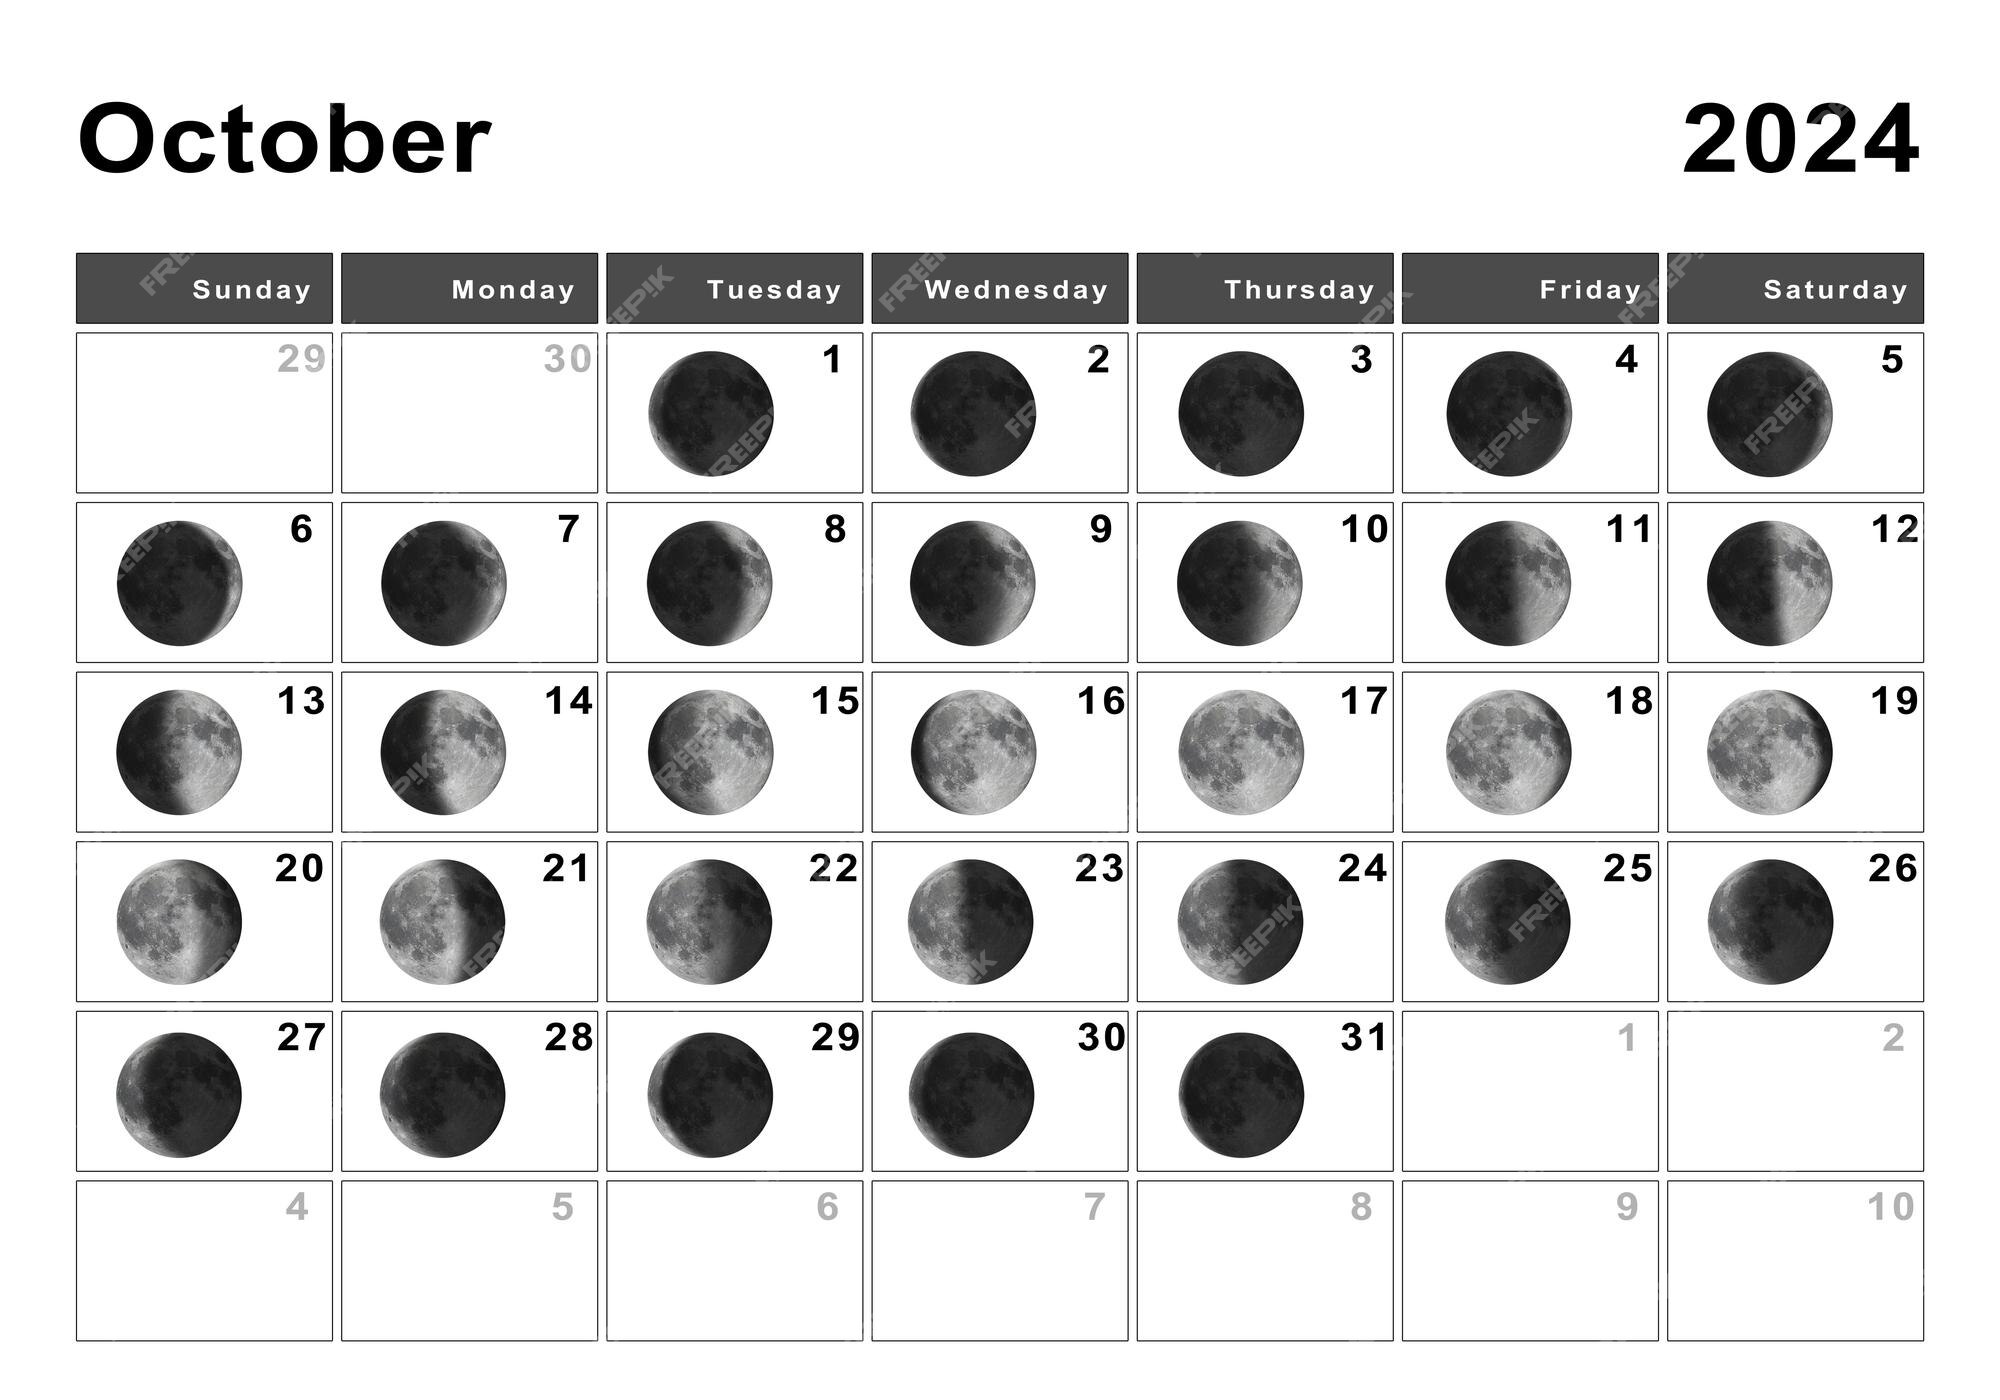 Premium Photo October 2024 lunar calendar, moon cycles, moon phases